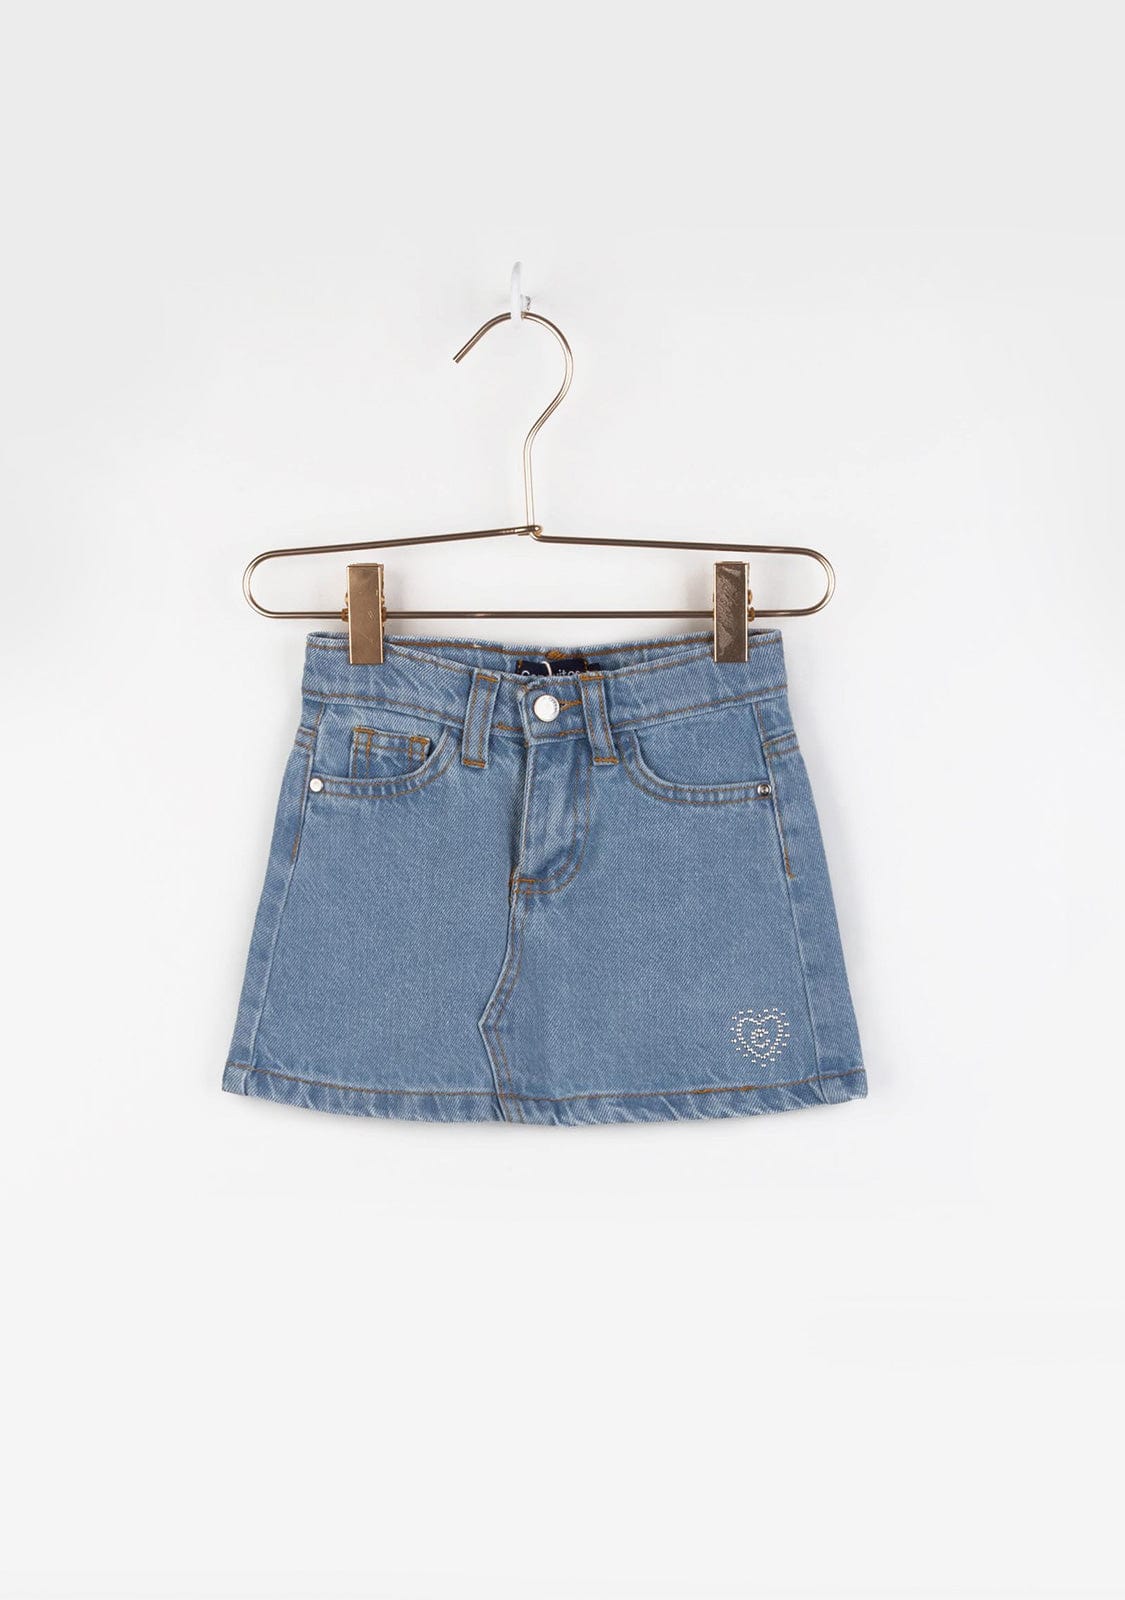 CONGUITOS TEXTIL Clothing Girl's Denim Mini Skirt